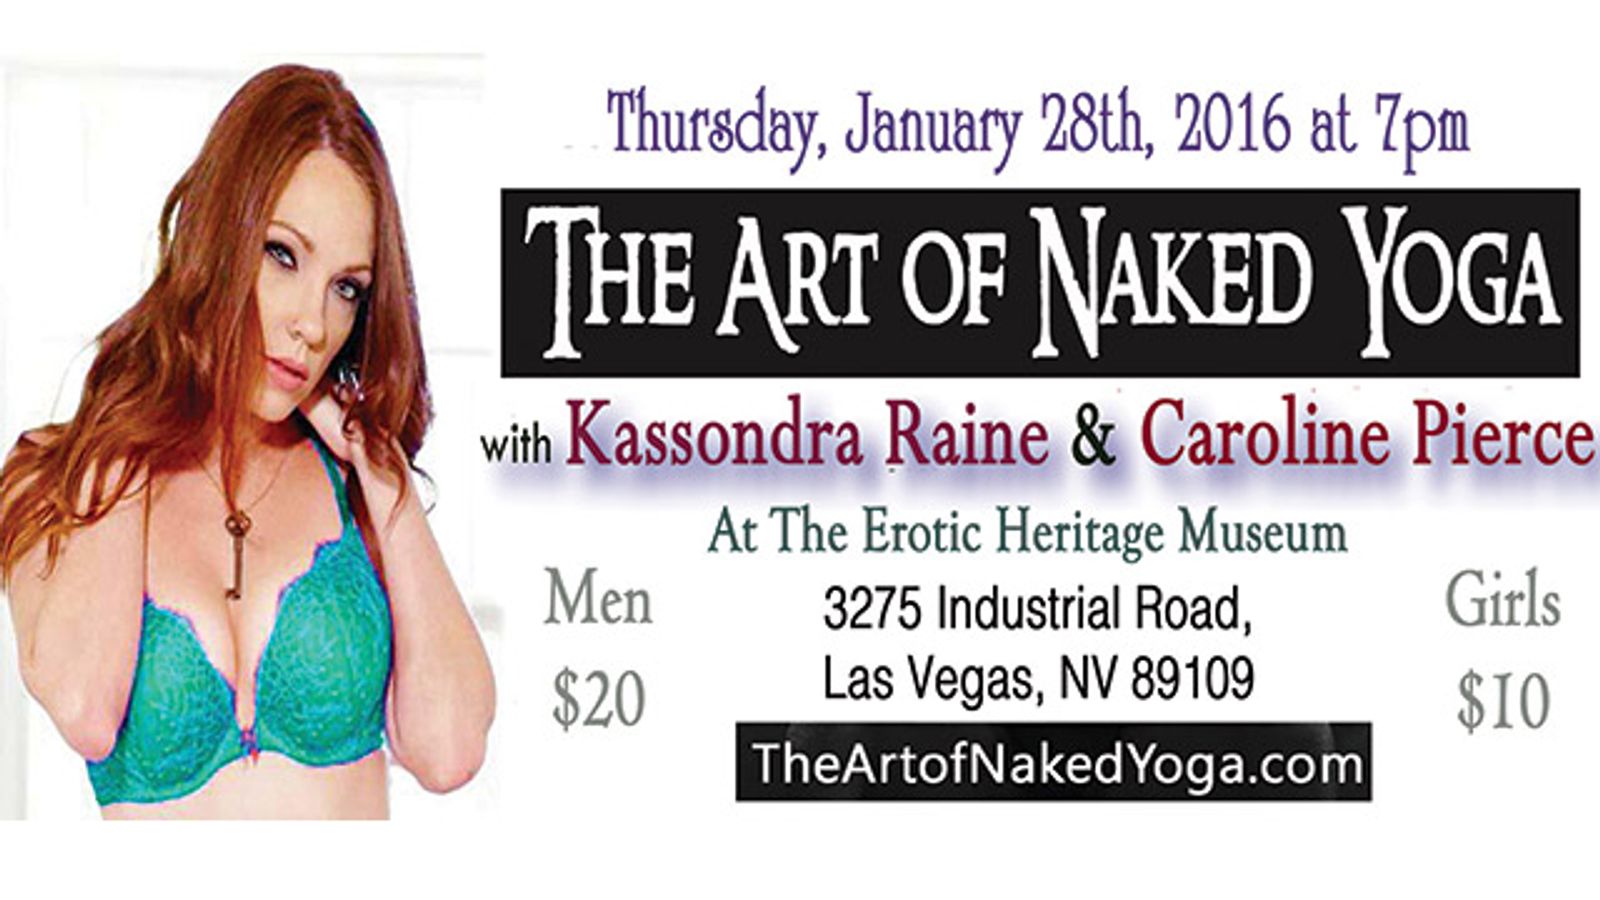 This Week's Art of Naked Yoga Features Caroline Pierce, Kassondra Raine